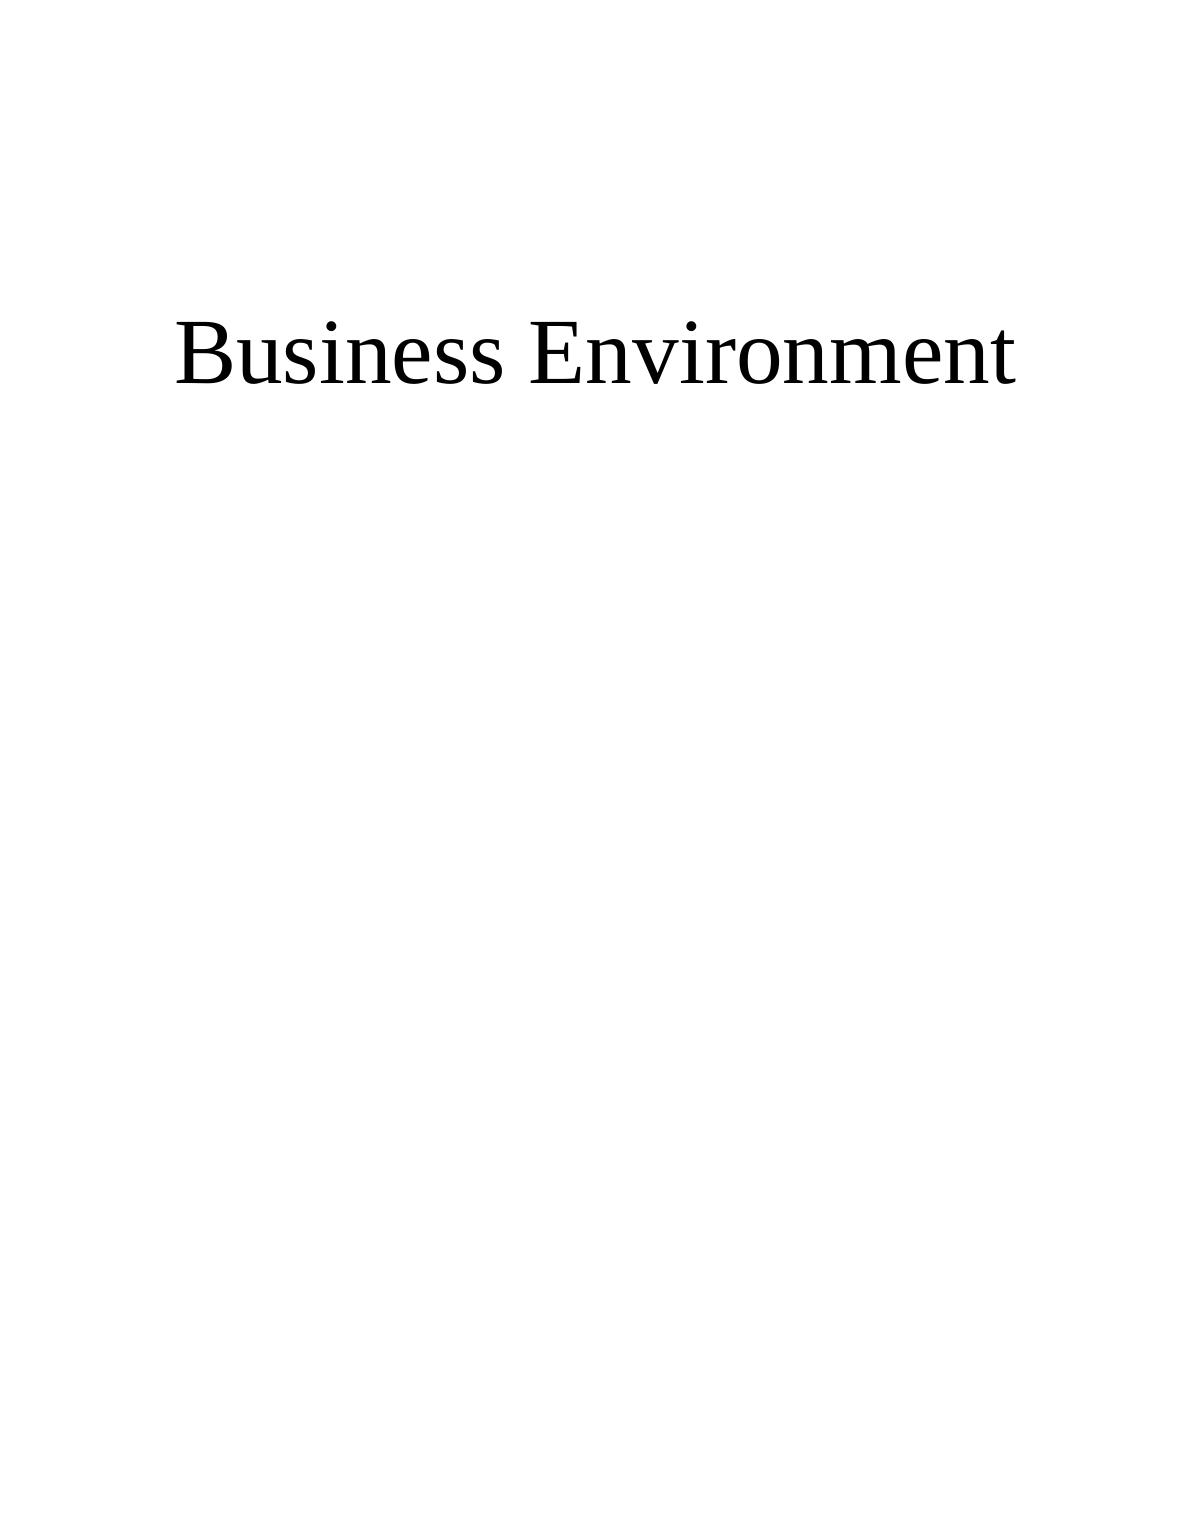 Business Environment Assignment (Britvic PLC)_1